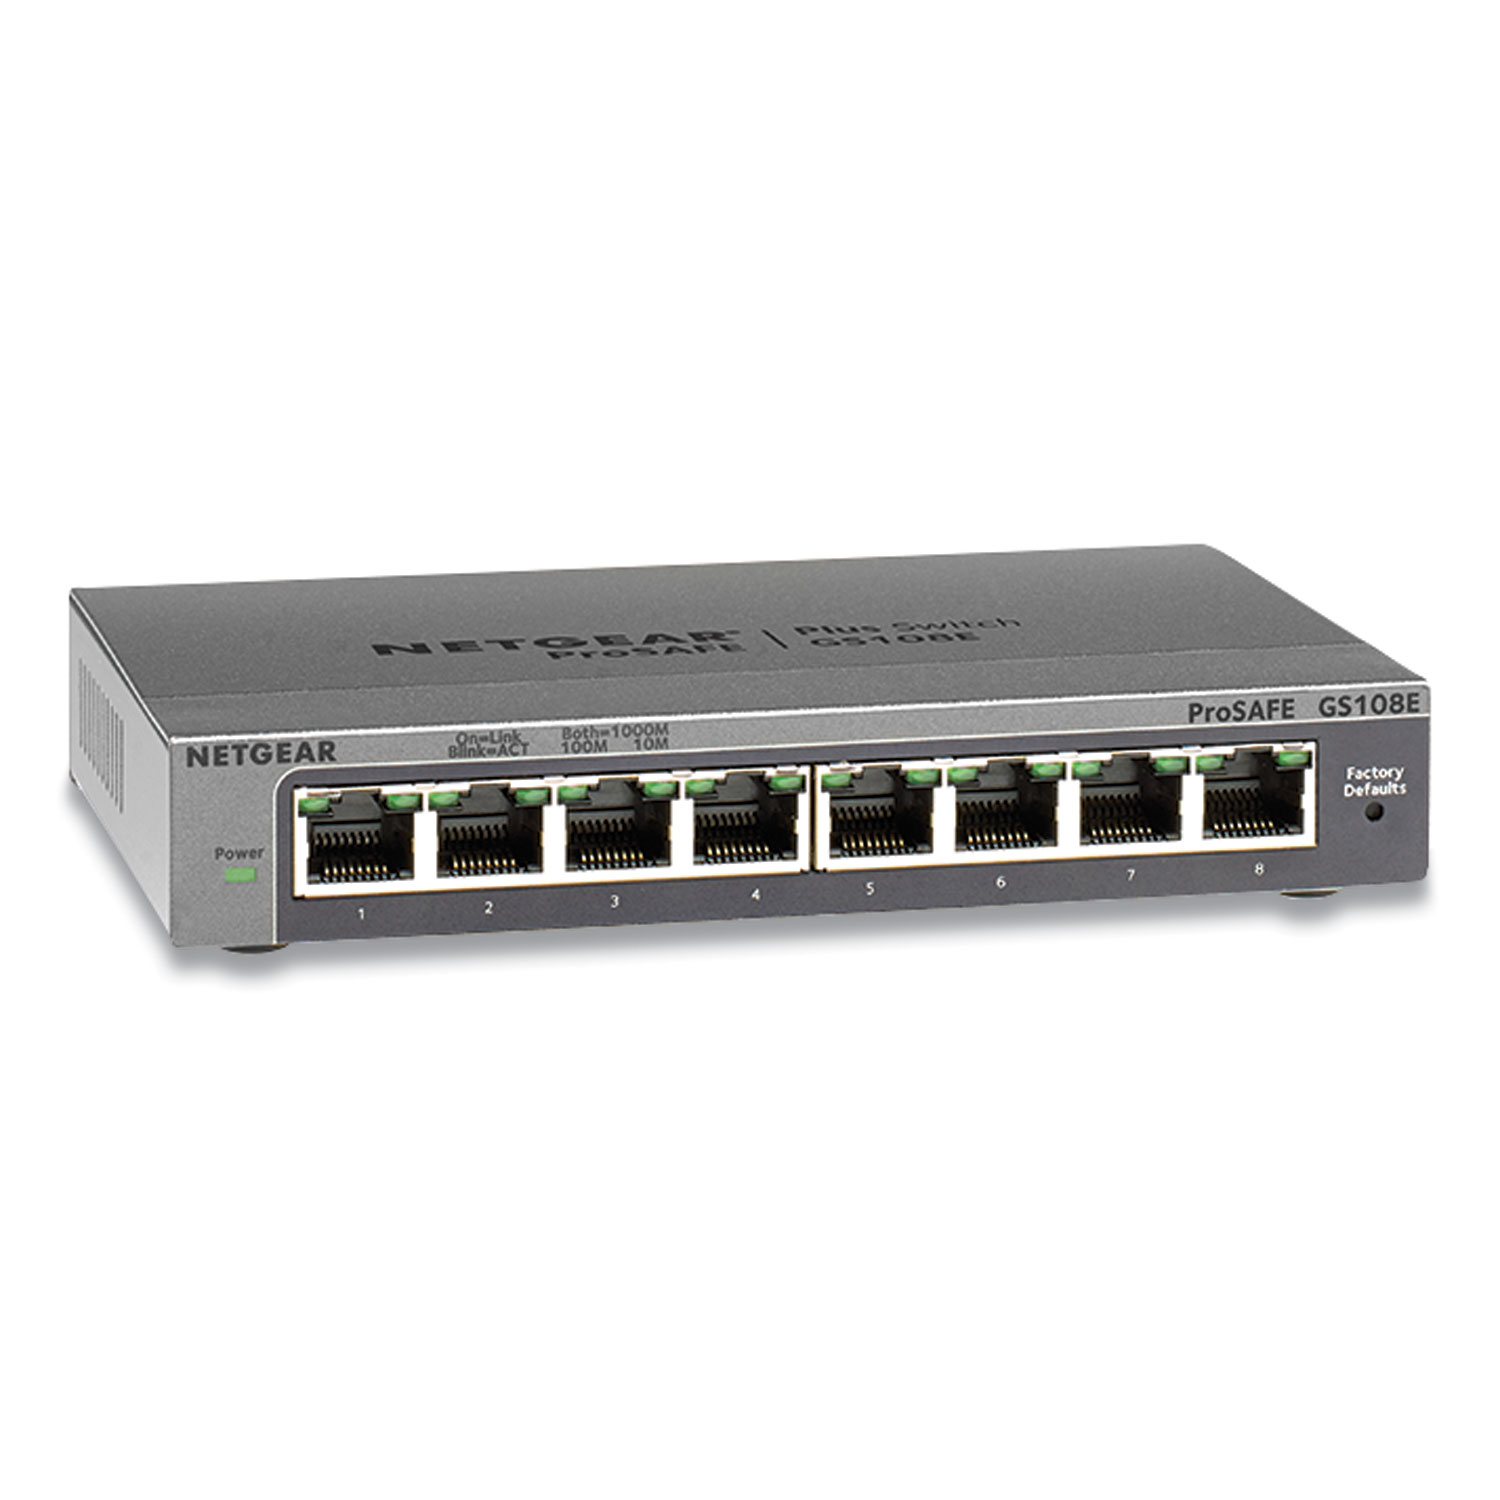 NETGEAR® ProSAFE Smart Managed Plus Gigabit Ethernet Switch, 16 Gbps Bandwidth, 192 KB Buffer, 8 Ports